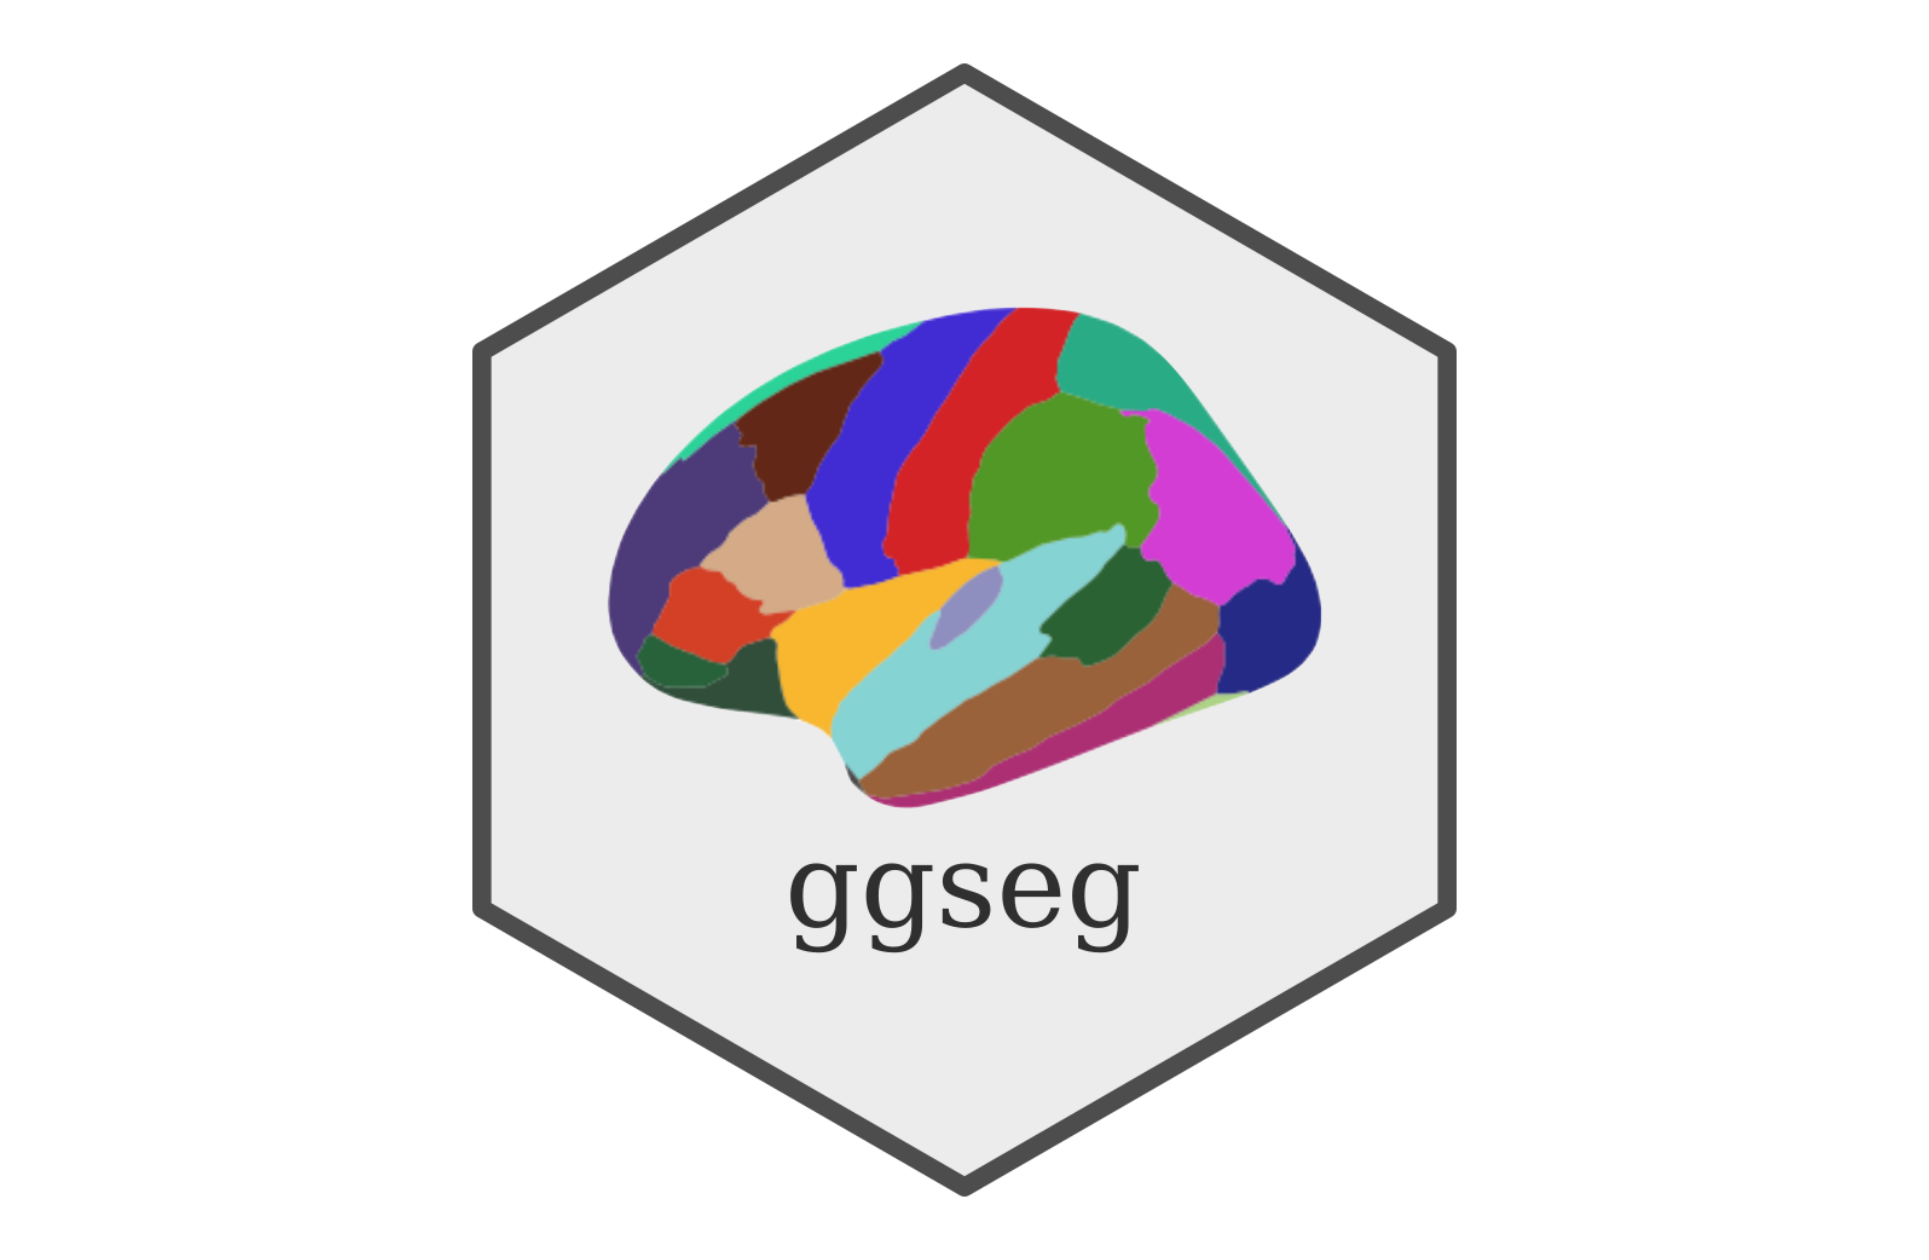 The ggseg-suite